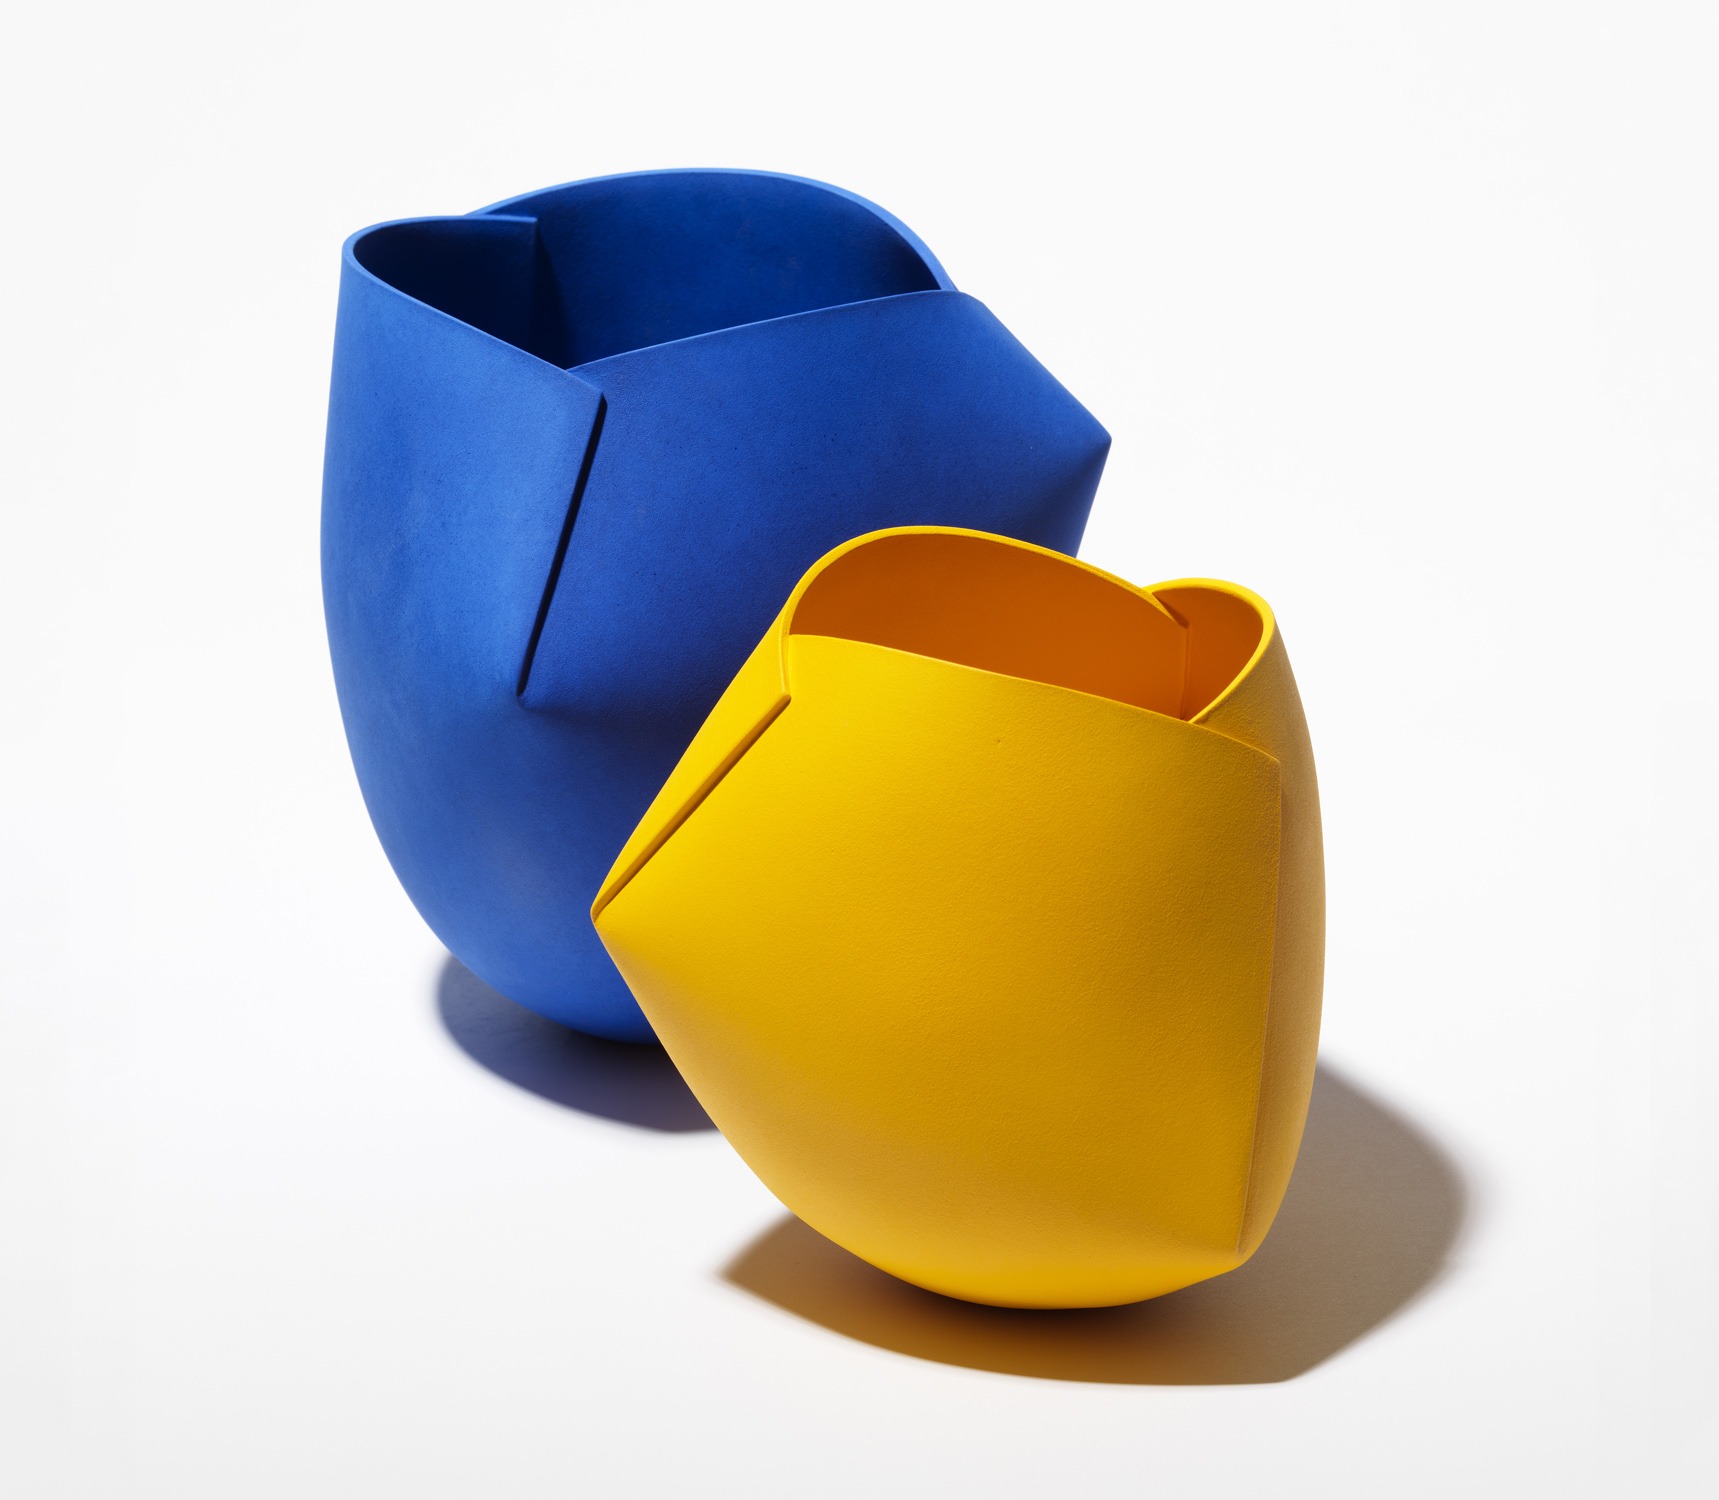 Ann Van Hoey - contemporary ceramic - Belgian ceramics - ceramic sculpture - design - ceramic design - French ceramic gallery - contemporary design